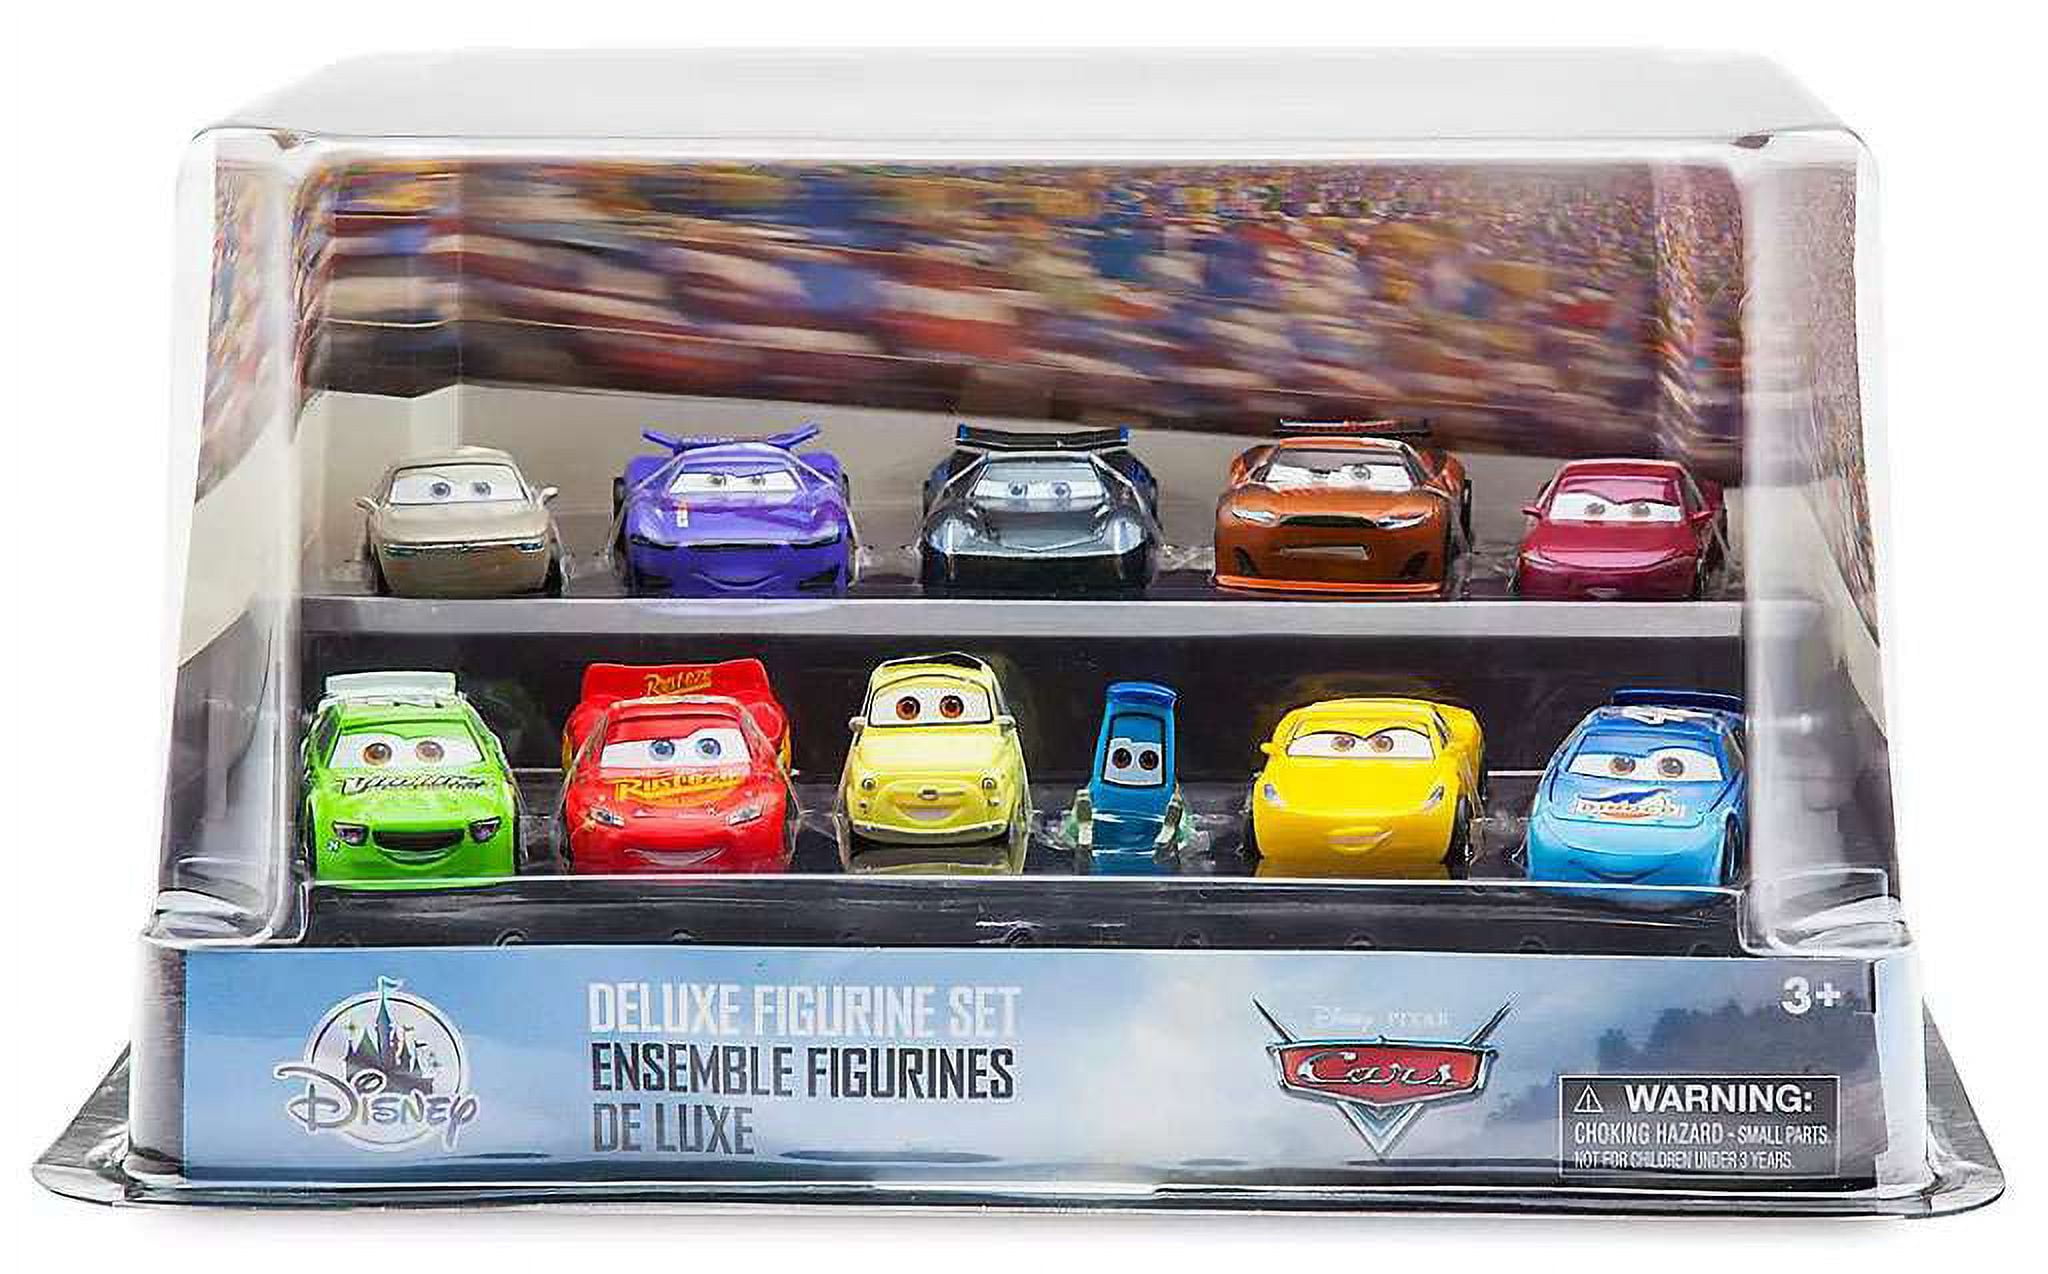 Disney store toy story 3 pixar figure Deluxe Figurine Set From Japan 